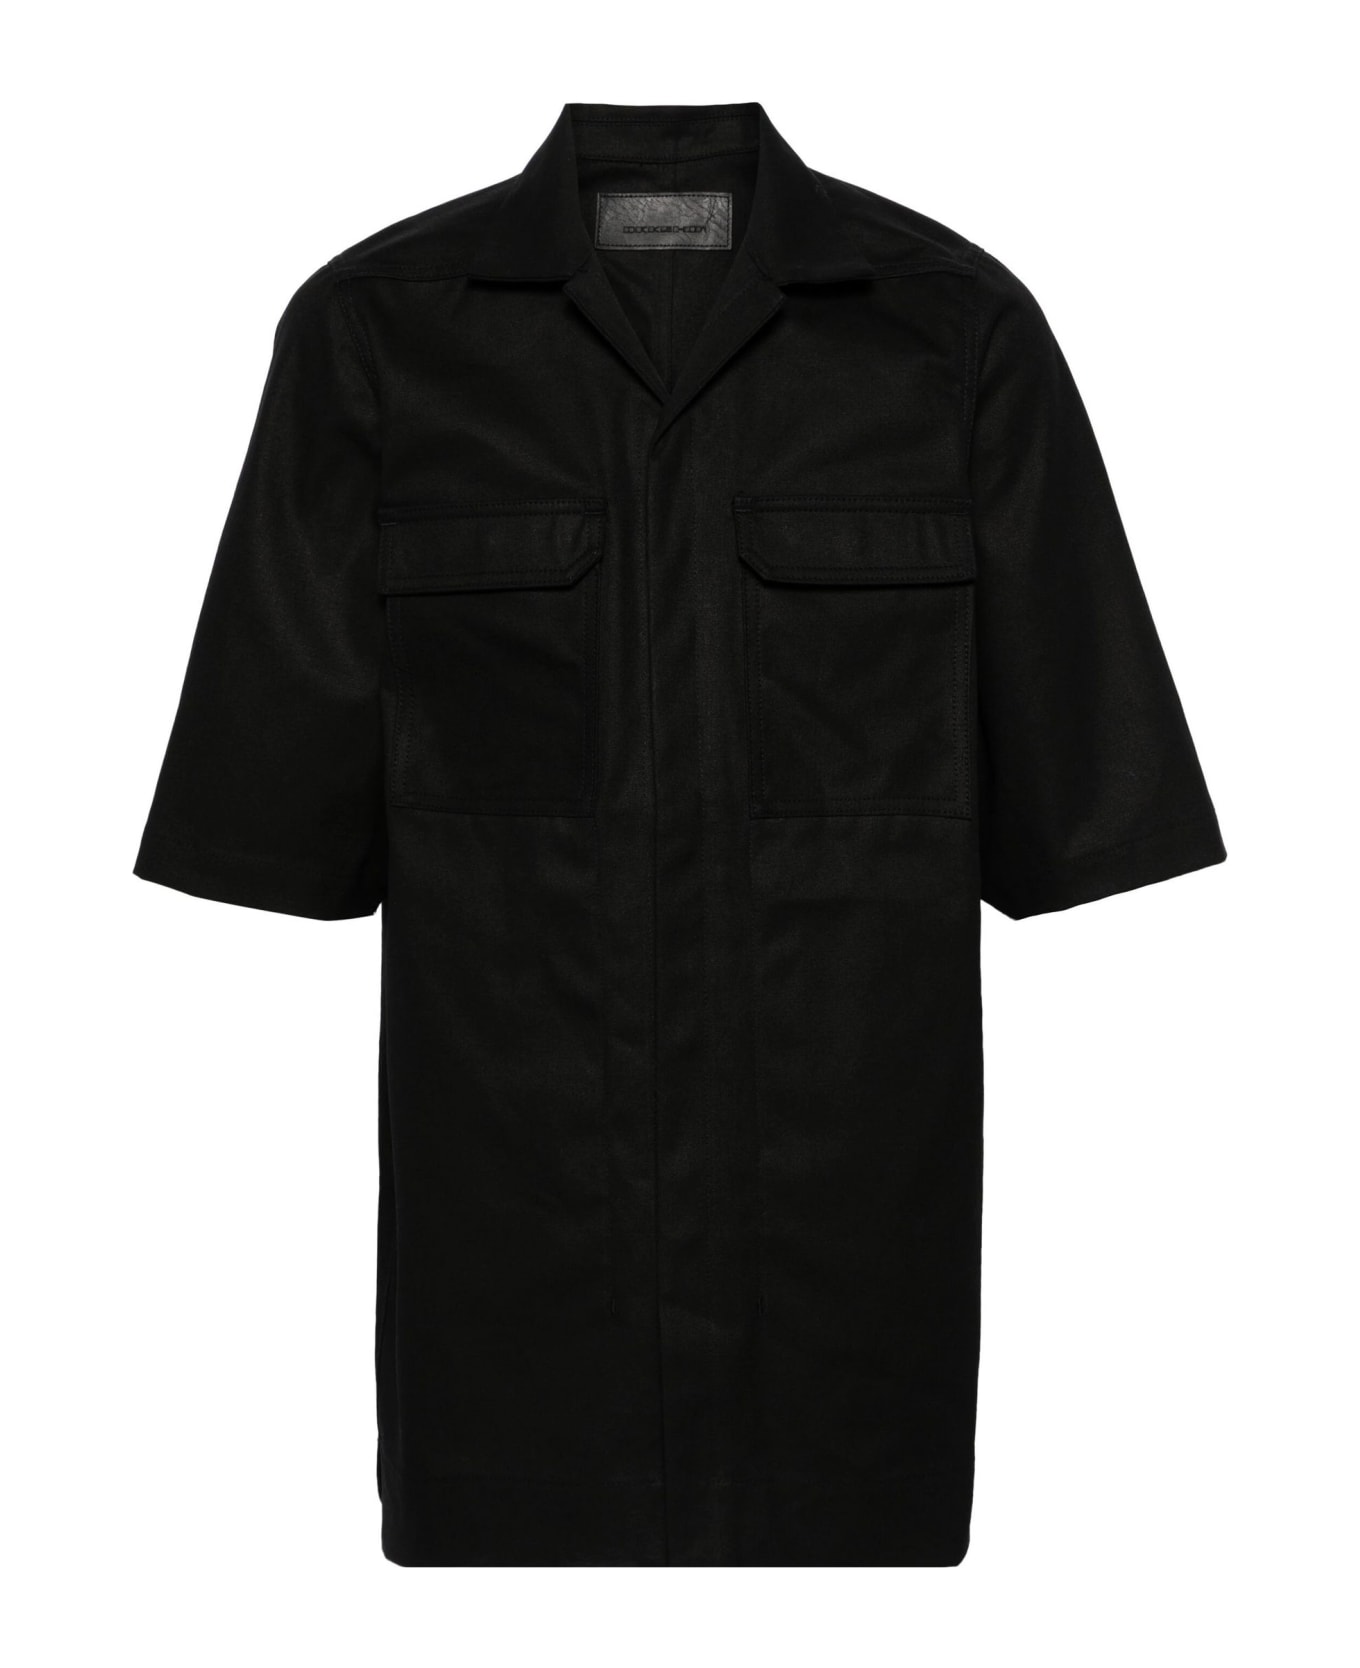 DRKSHDW Shirts Black - Black